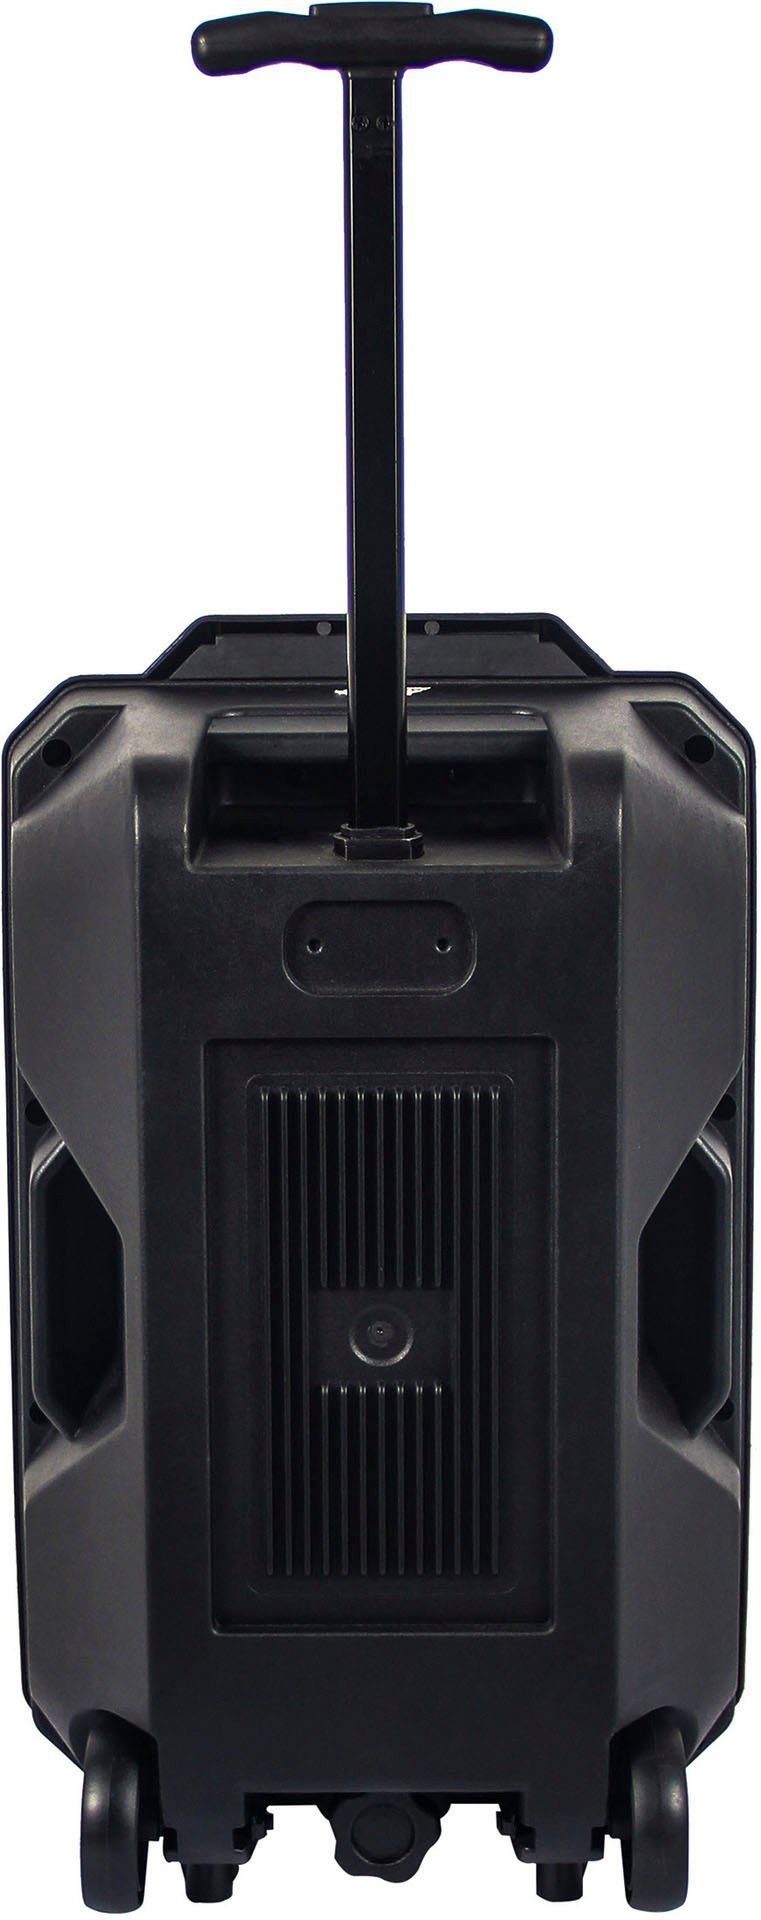 Portable-Lautsprecher TSP-120 (Bluetooth, 8 Denver W)